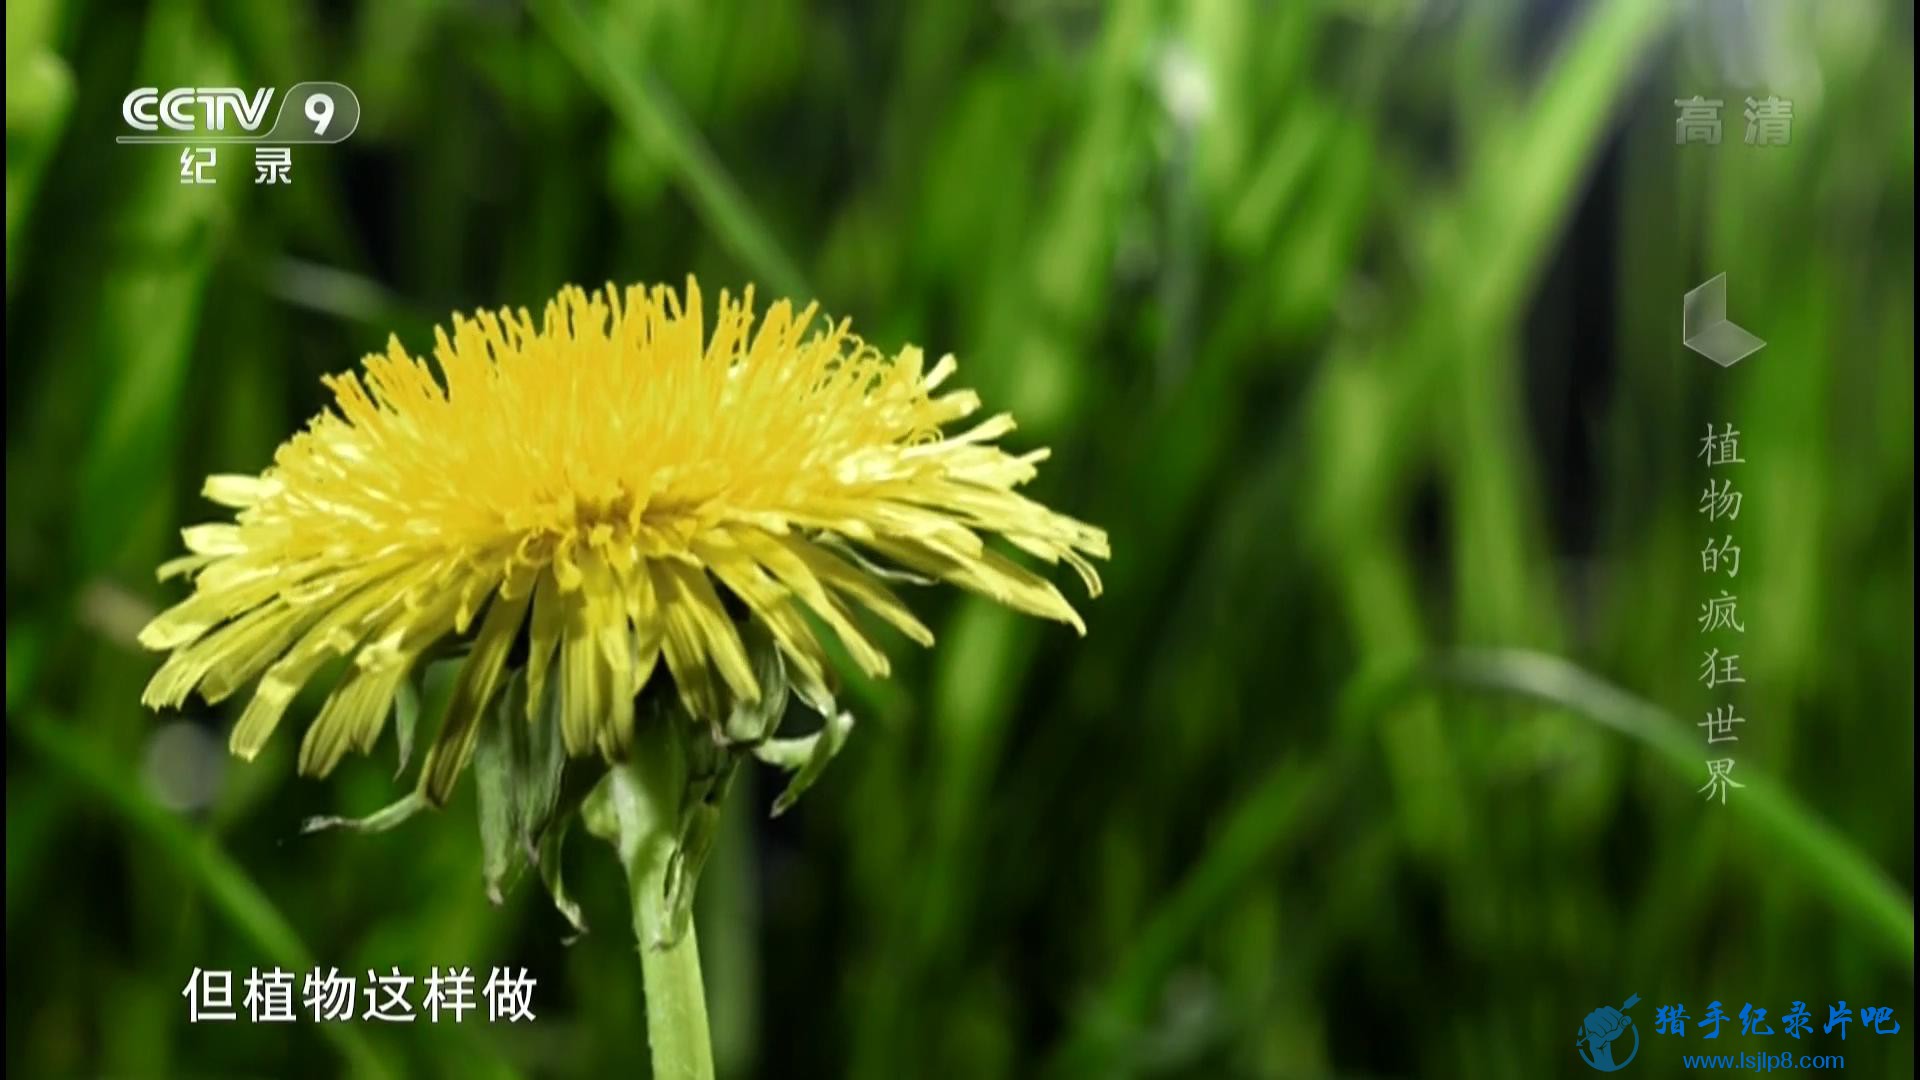 CCTV9 Ұ ֲķ Amazing Plants (2015).1080P.20150217_20180124125414.JPG